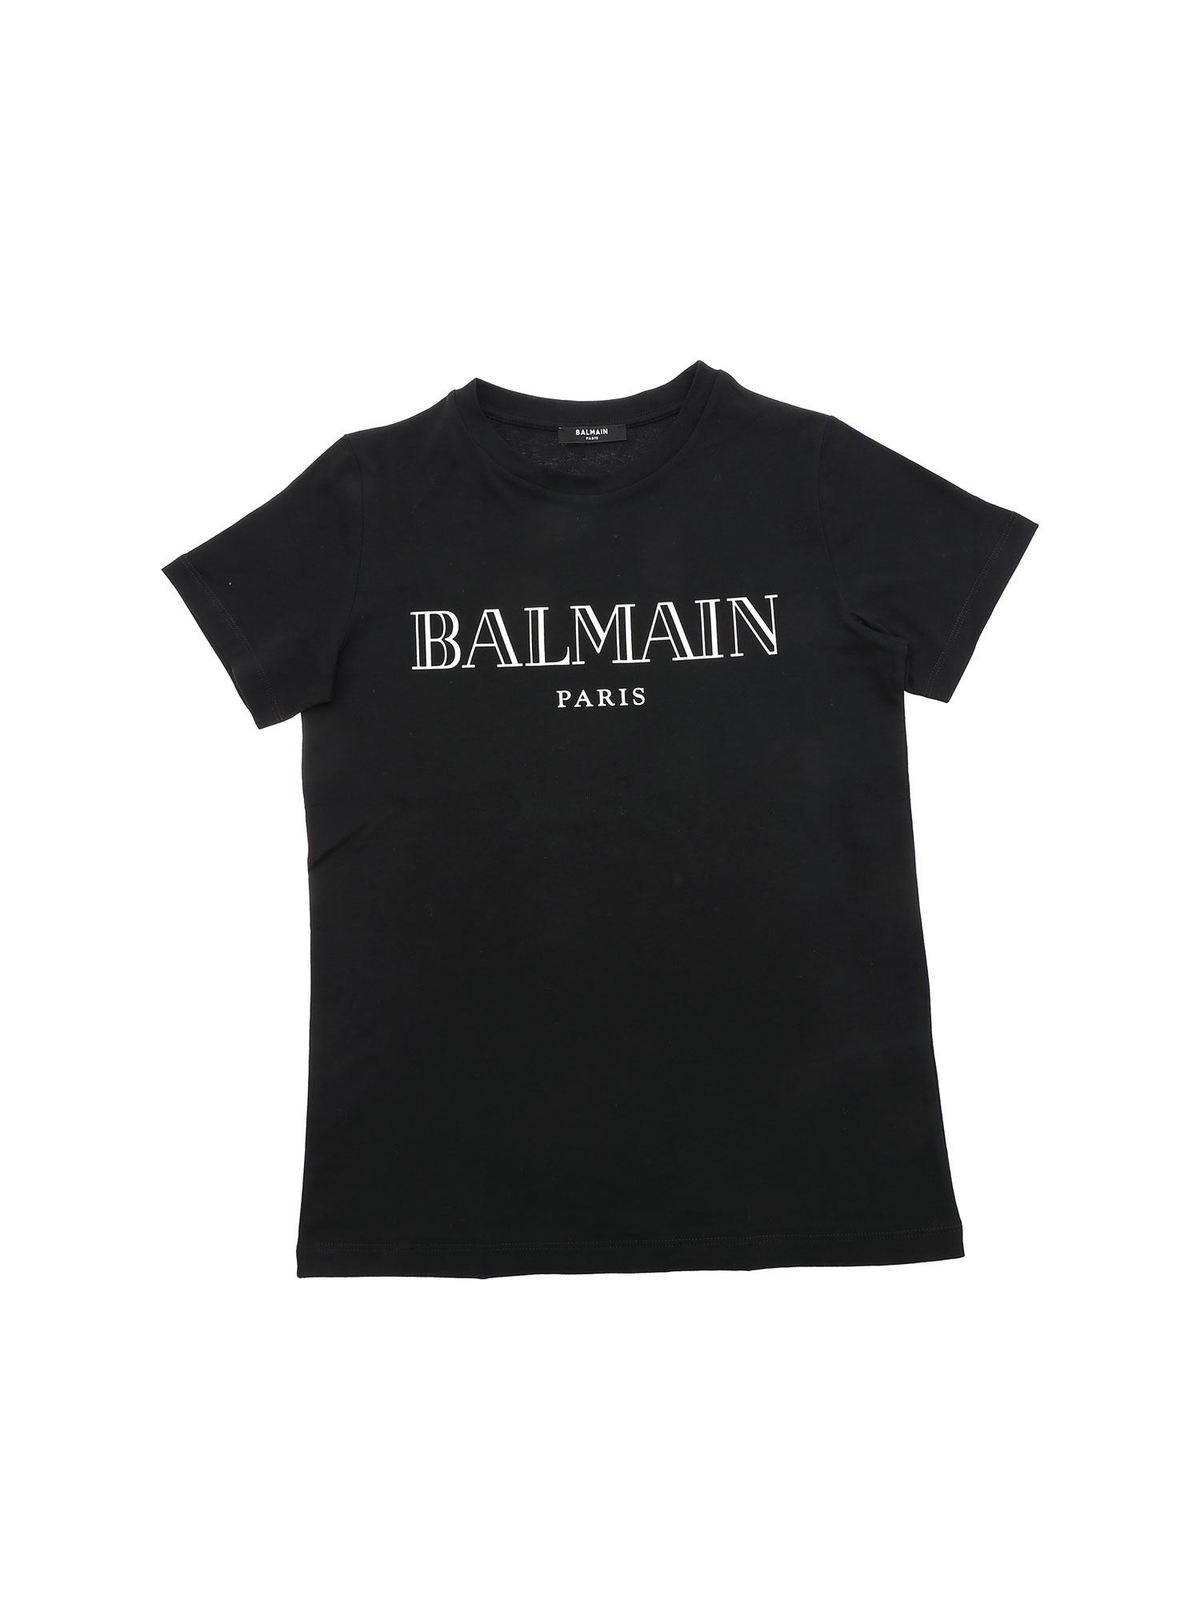 Balmain T Shirt Black Outlet, 60% OFF | www.alforja.cat